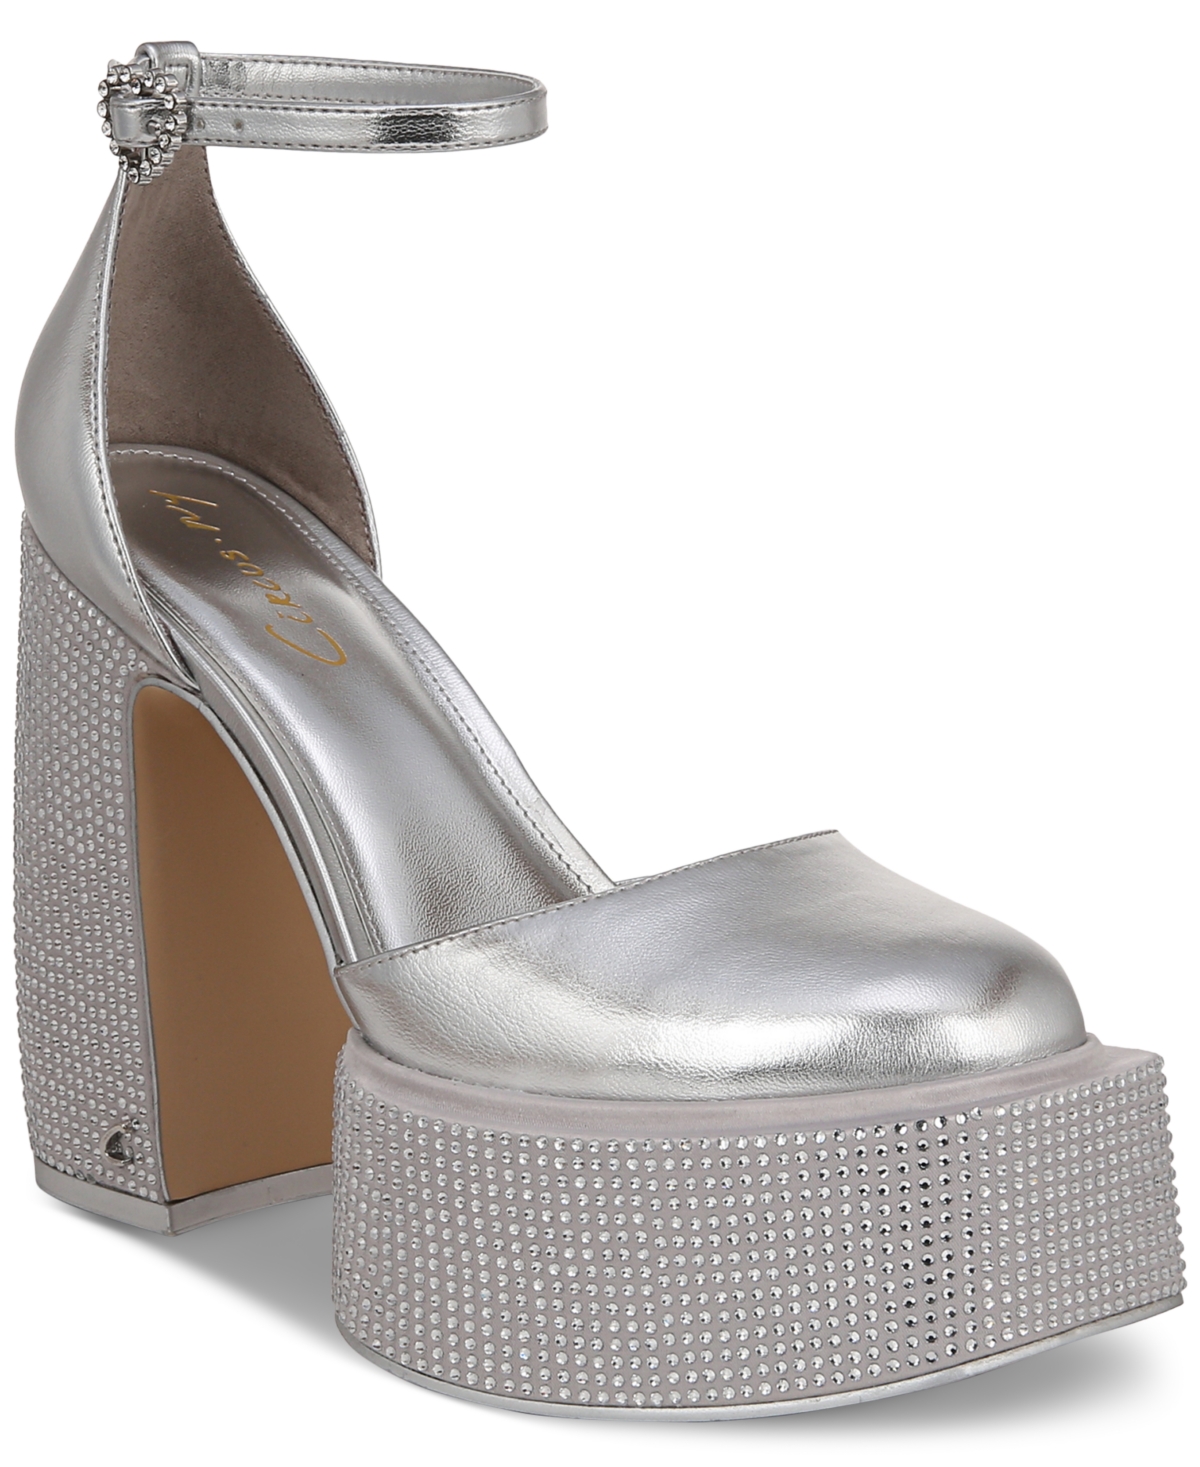 Women's Bailey Jewel Two-Piece Ankle-Strap Platform Pumps - Soft Silver